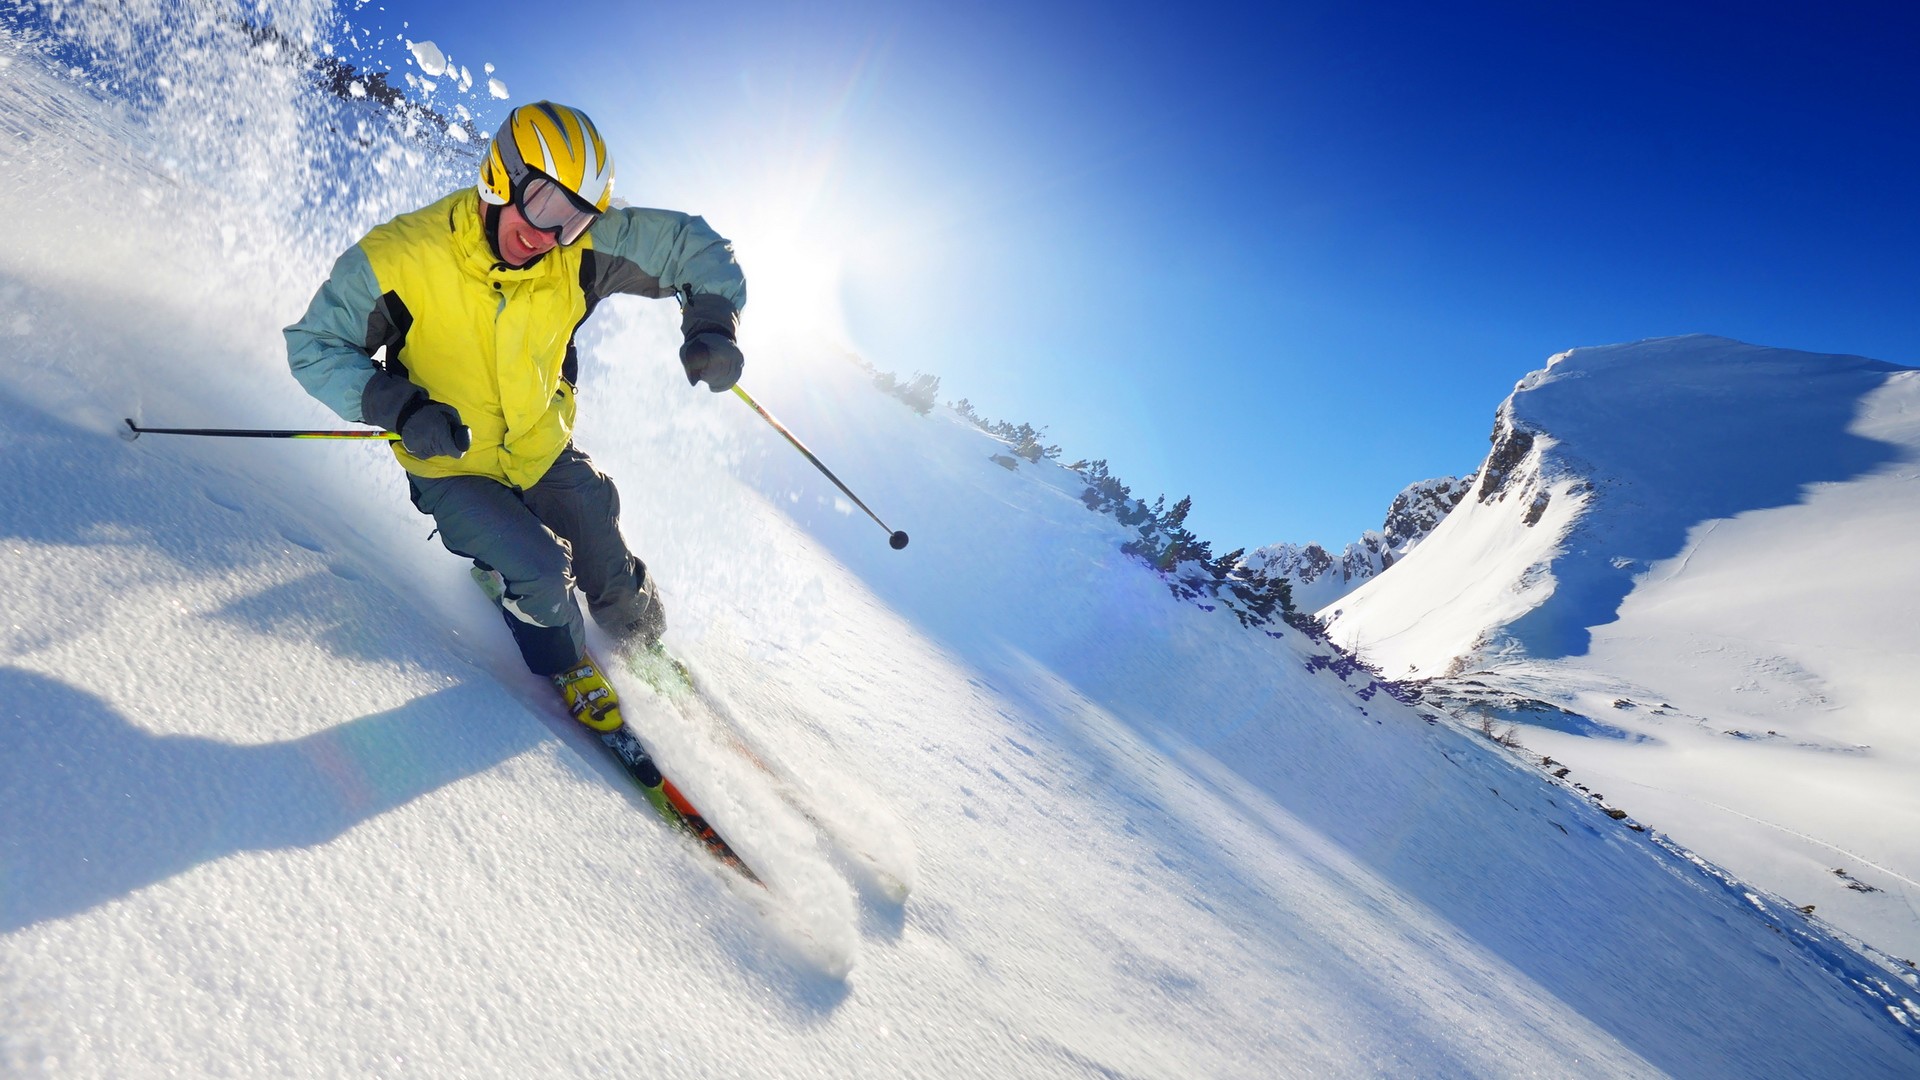 General 1920x1080 snow men skiing sport winter men outdoors landscape